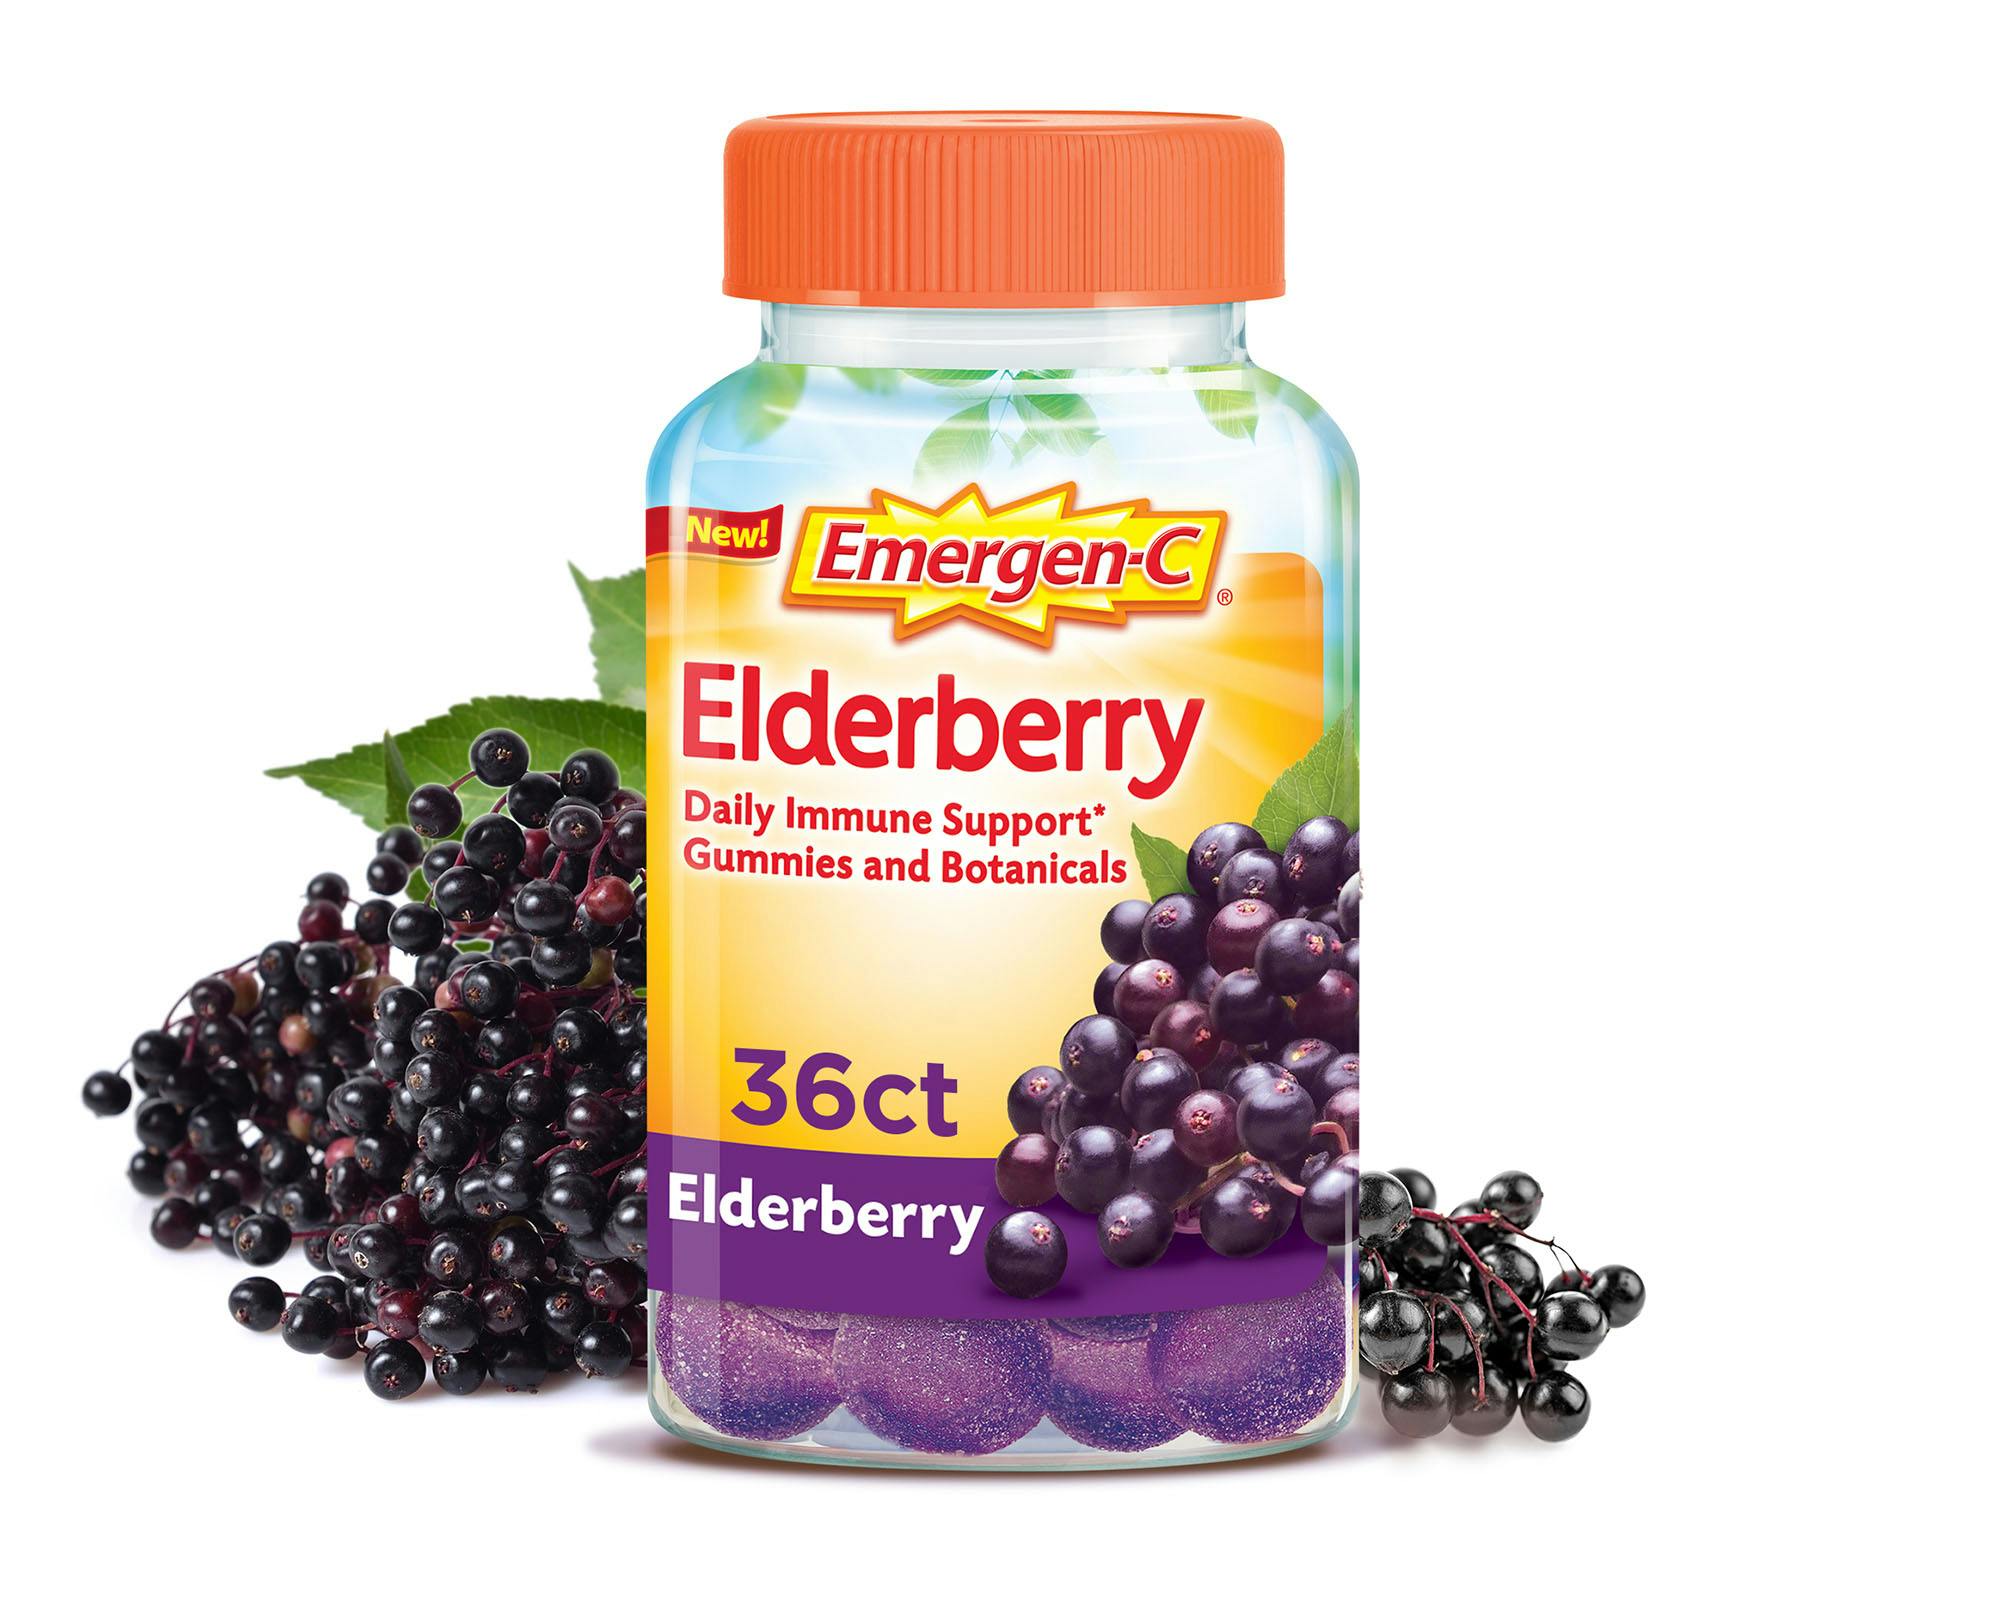 Elderberry Botanicals Immune Support Gummies bottle grouped with elderberries